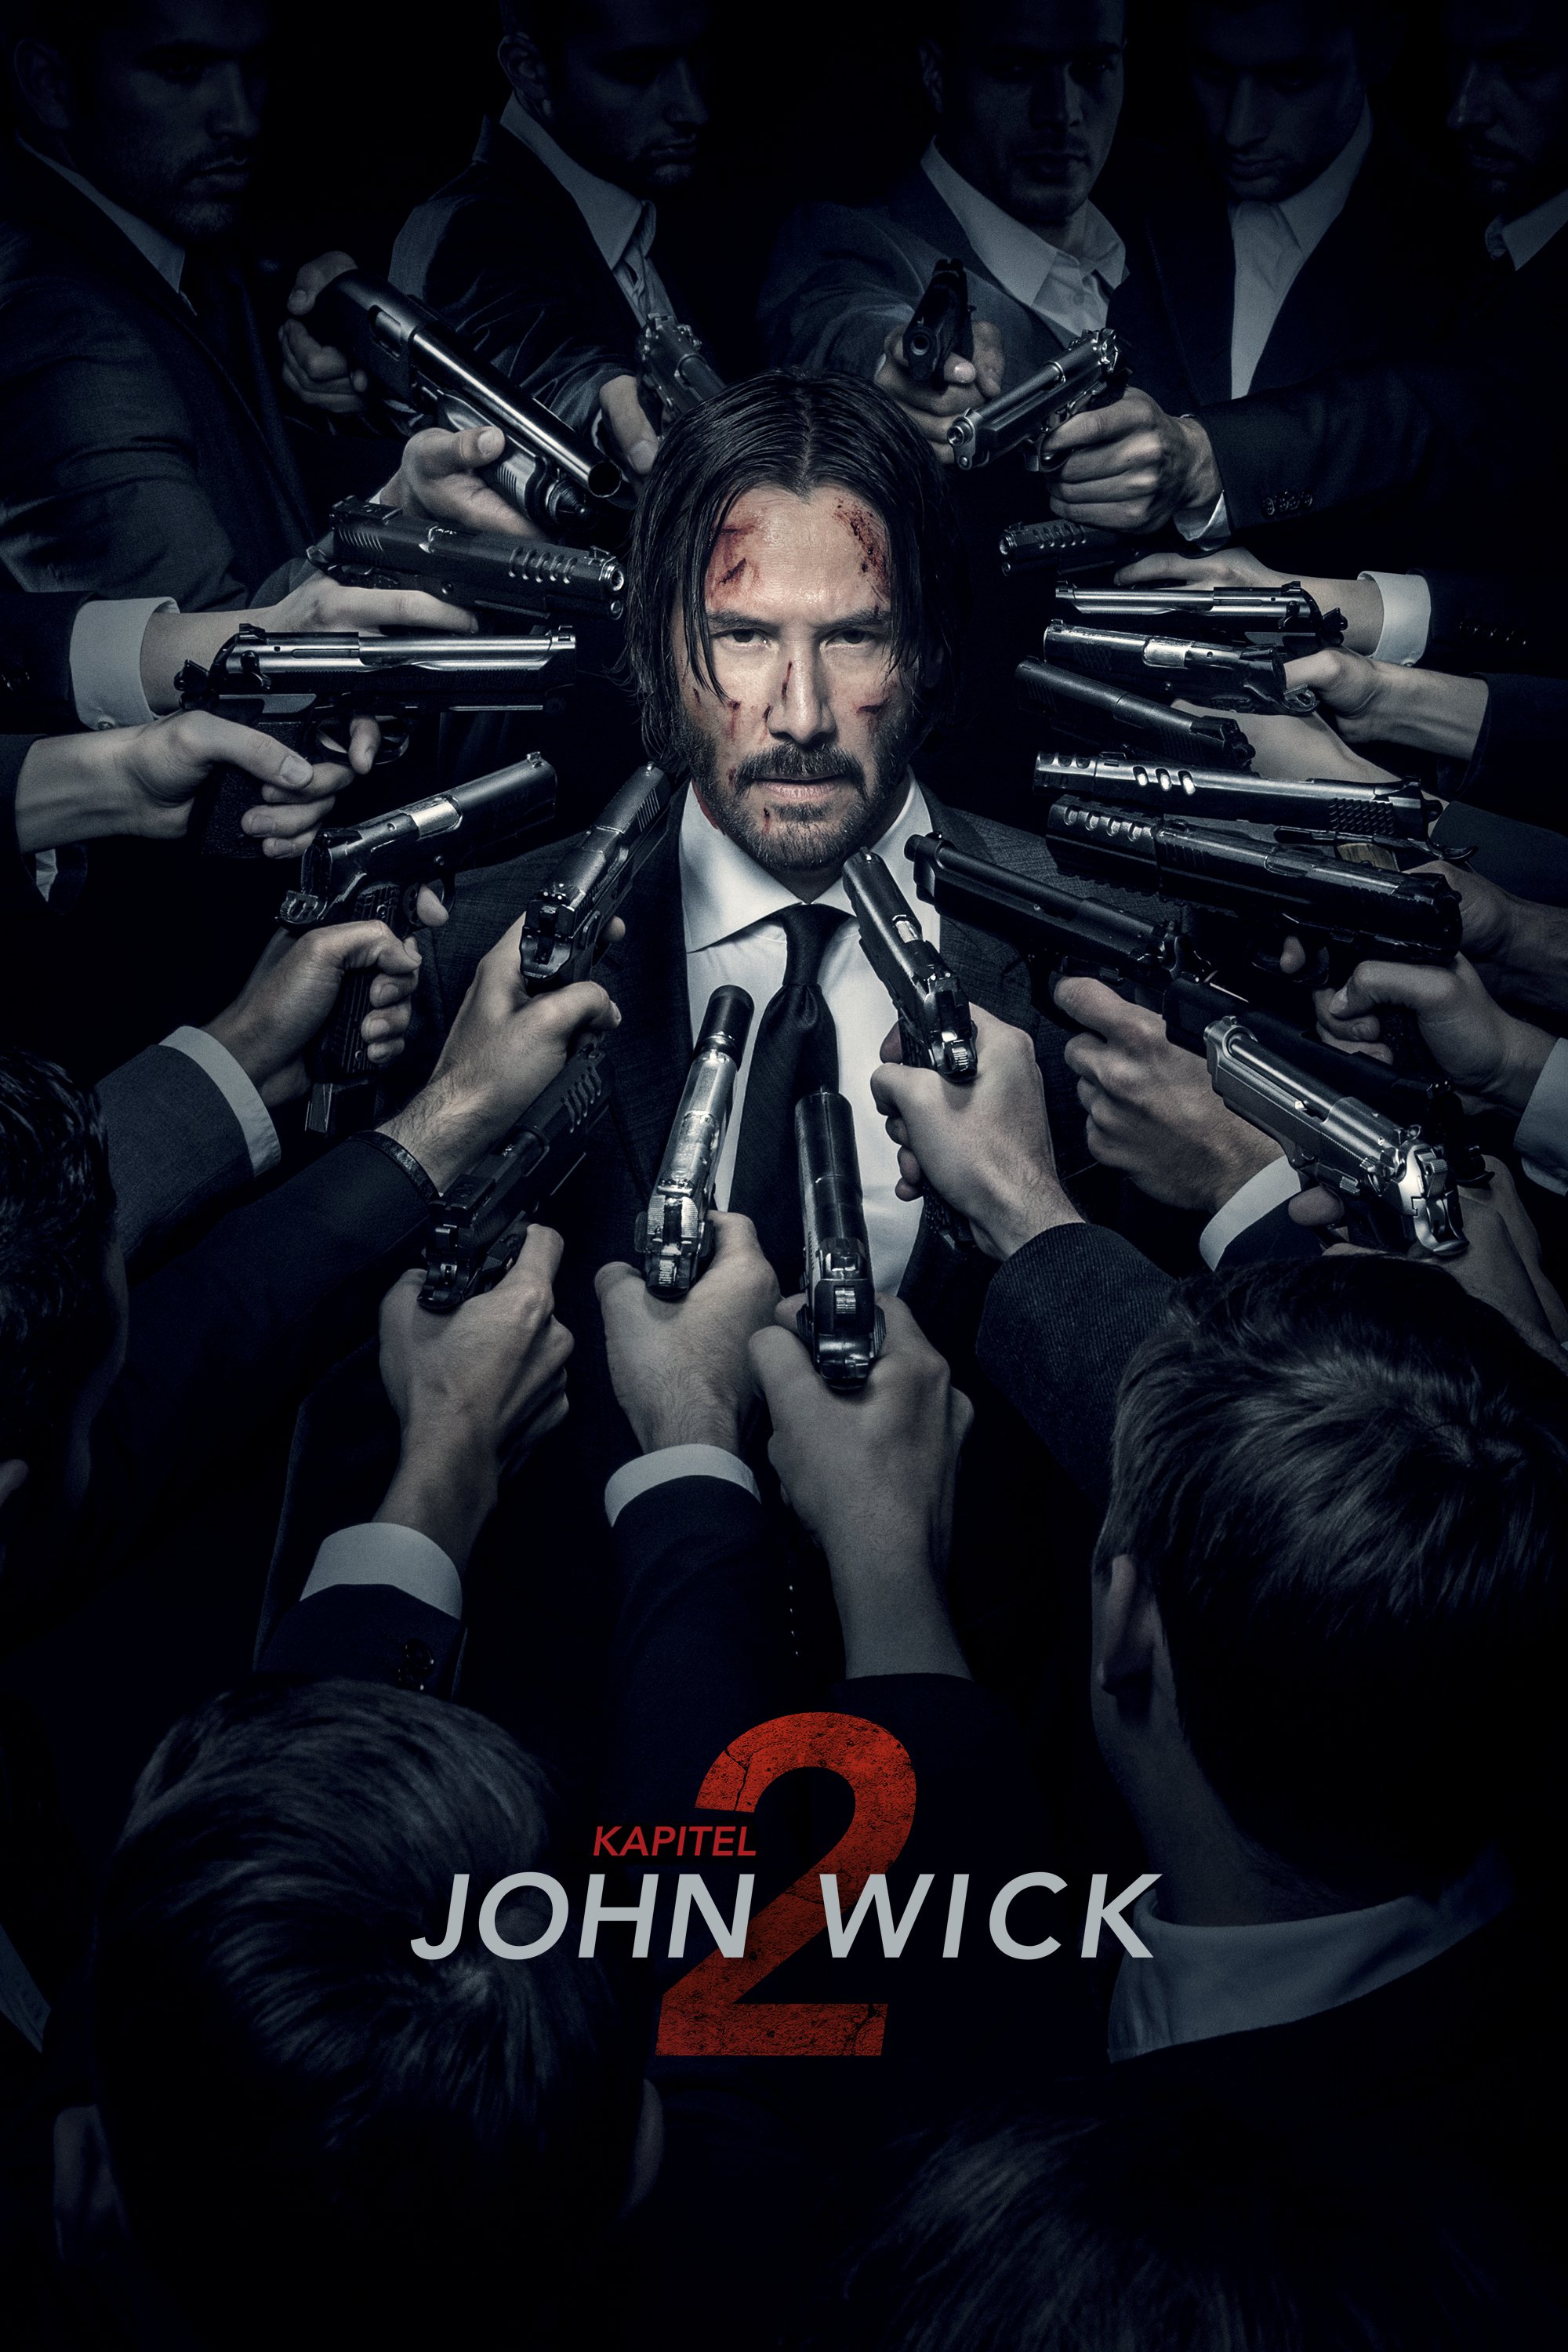 Plakat von "John Wick: Kapitel 2"